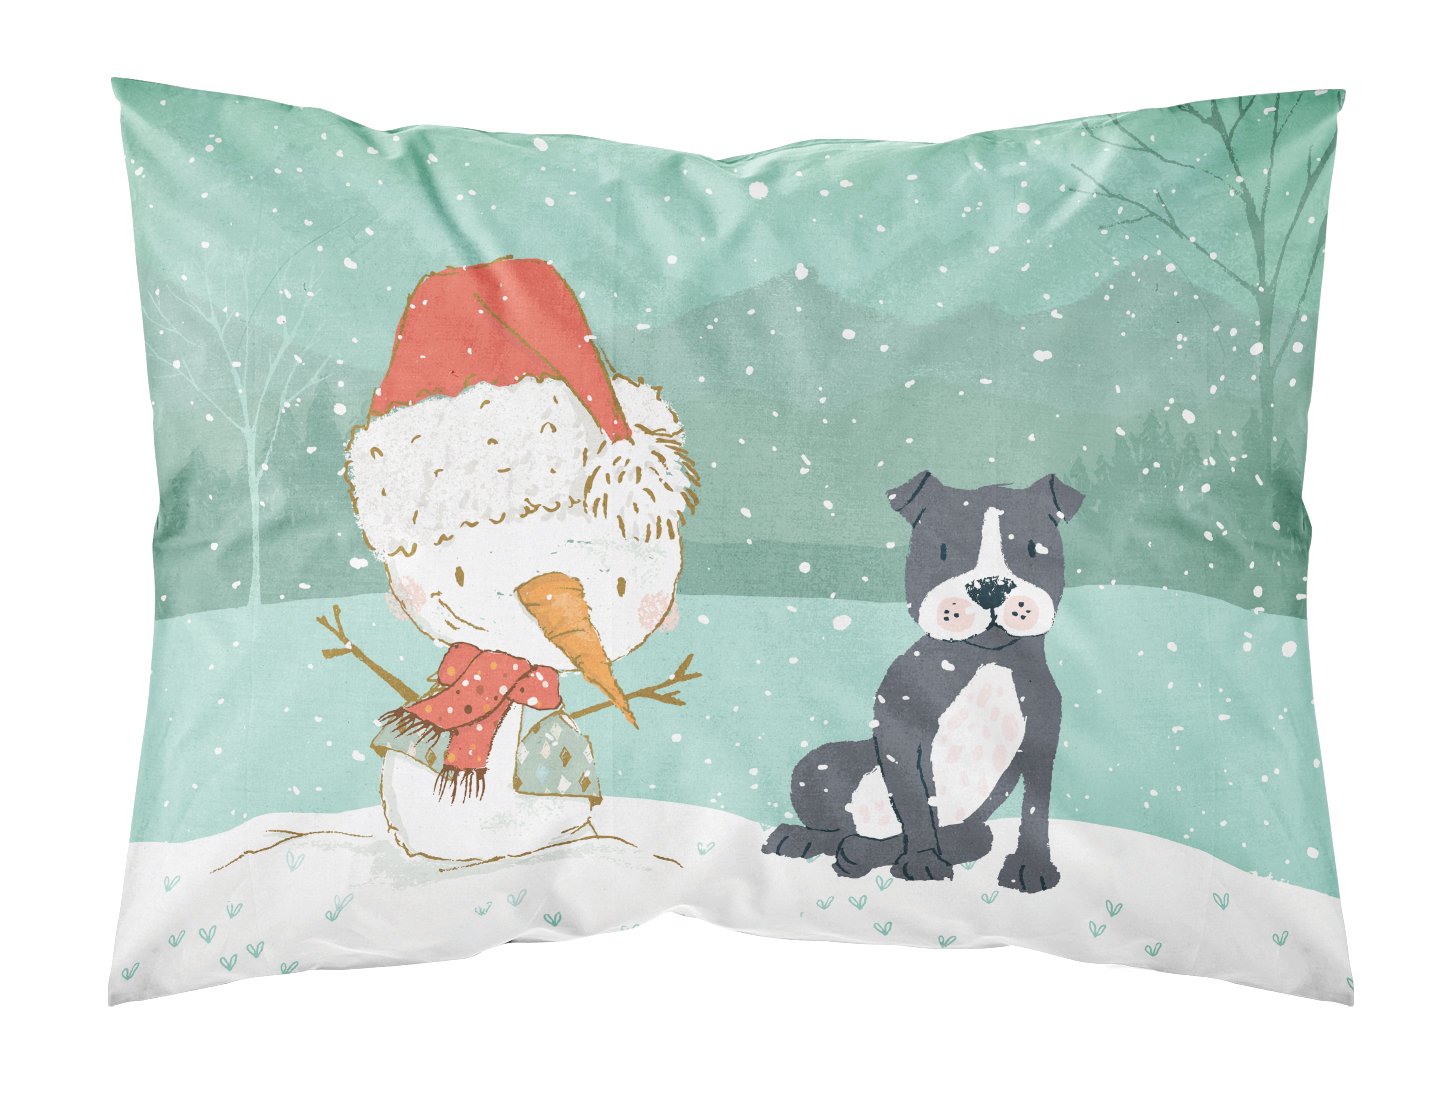 Black Staffie Snowman Christmas Fabric Standard Pillowcase CK2075PILLOWCASE by Caroline's Treasures